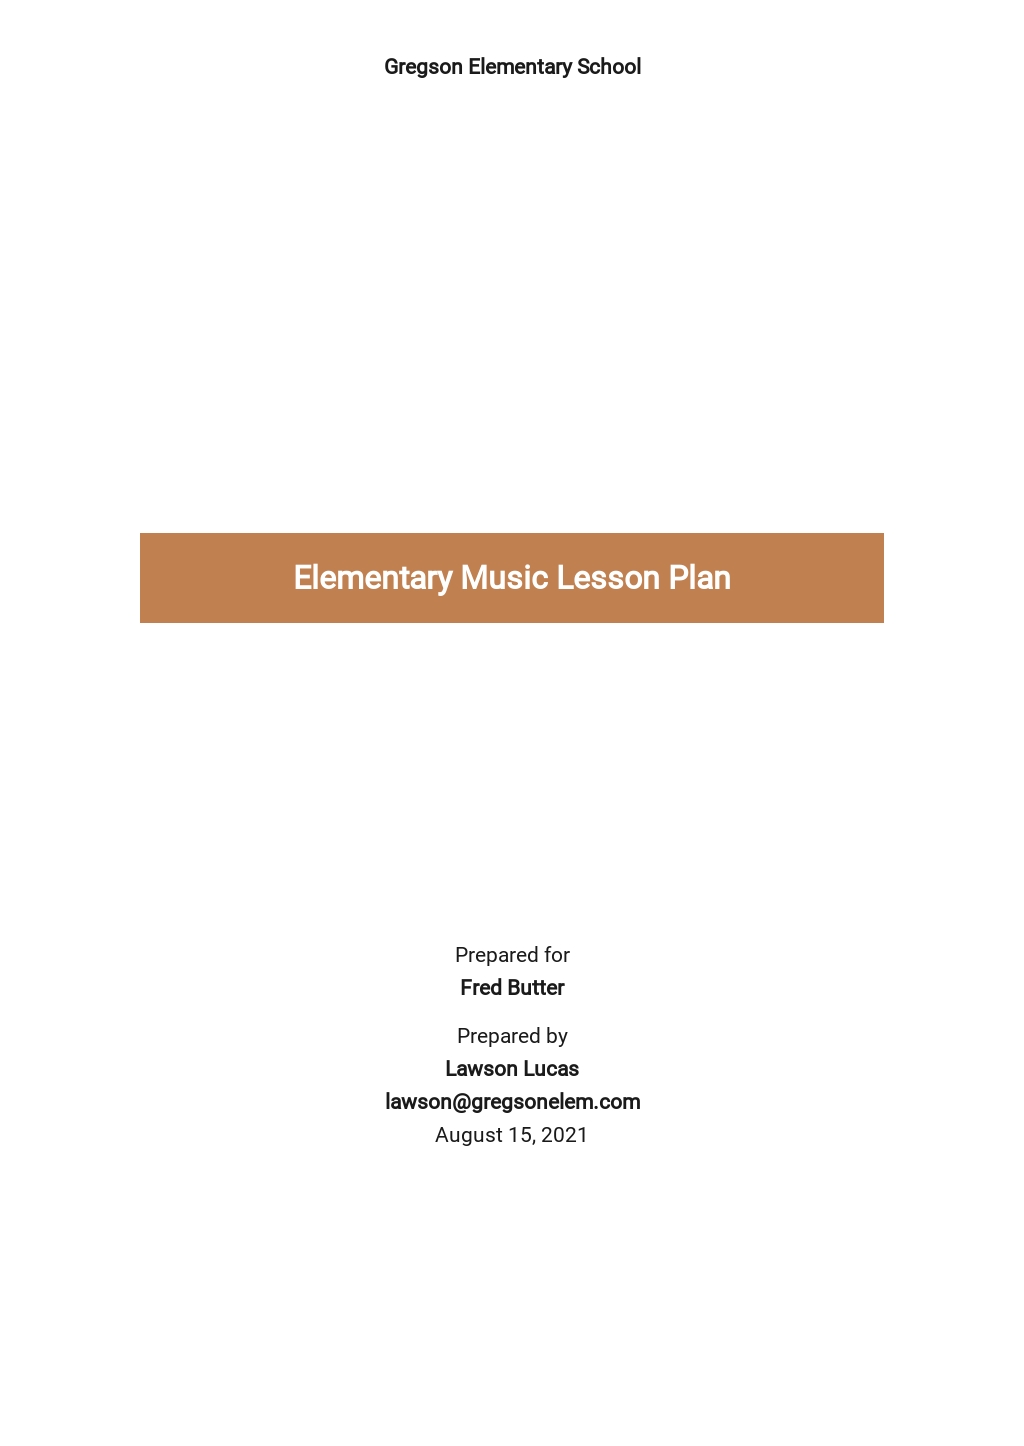 Elementary Music Lesson Plan Template.jpe